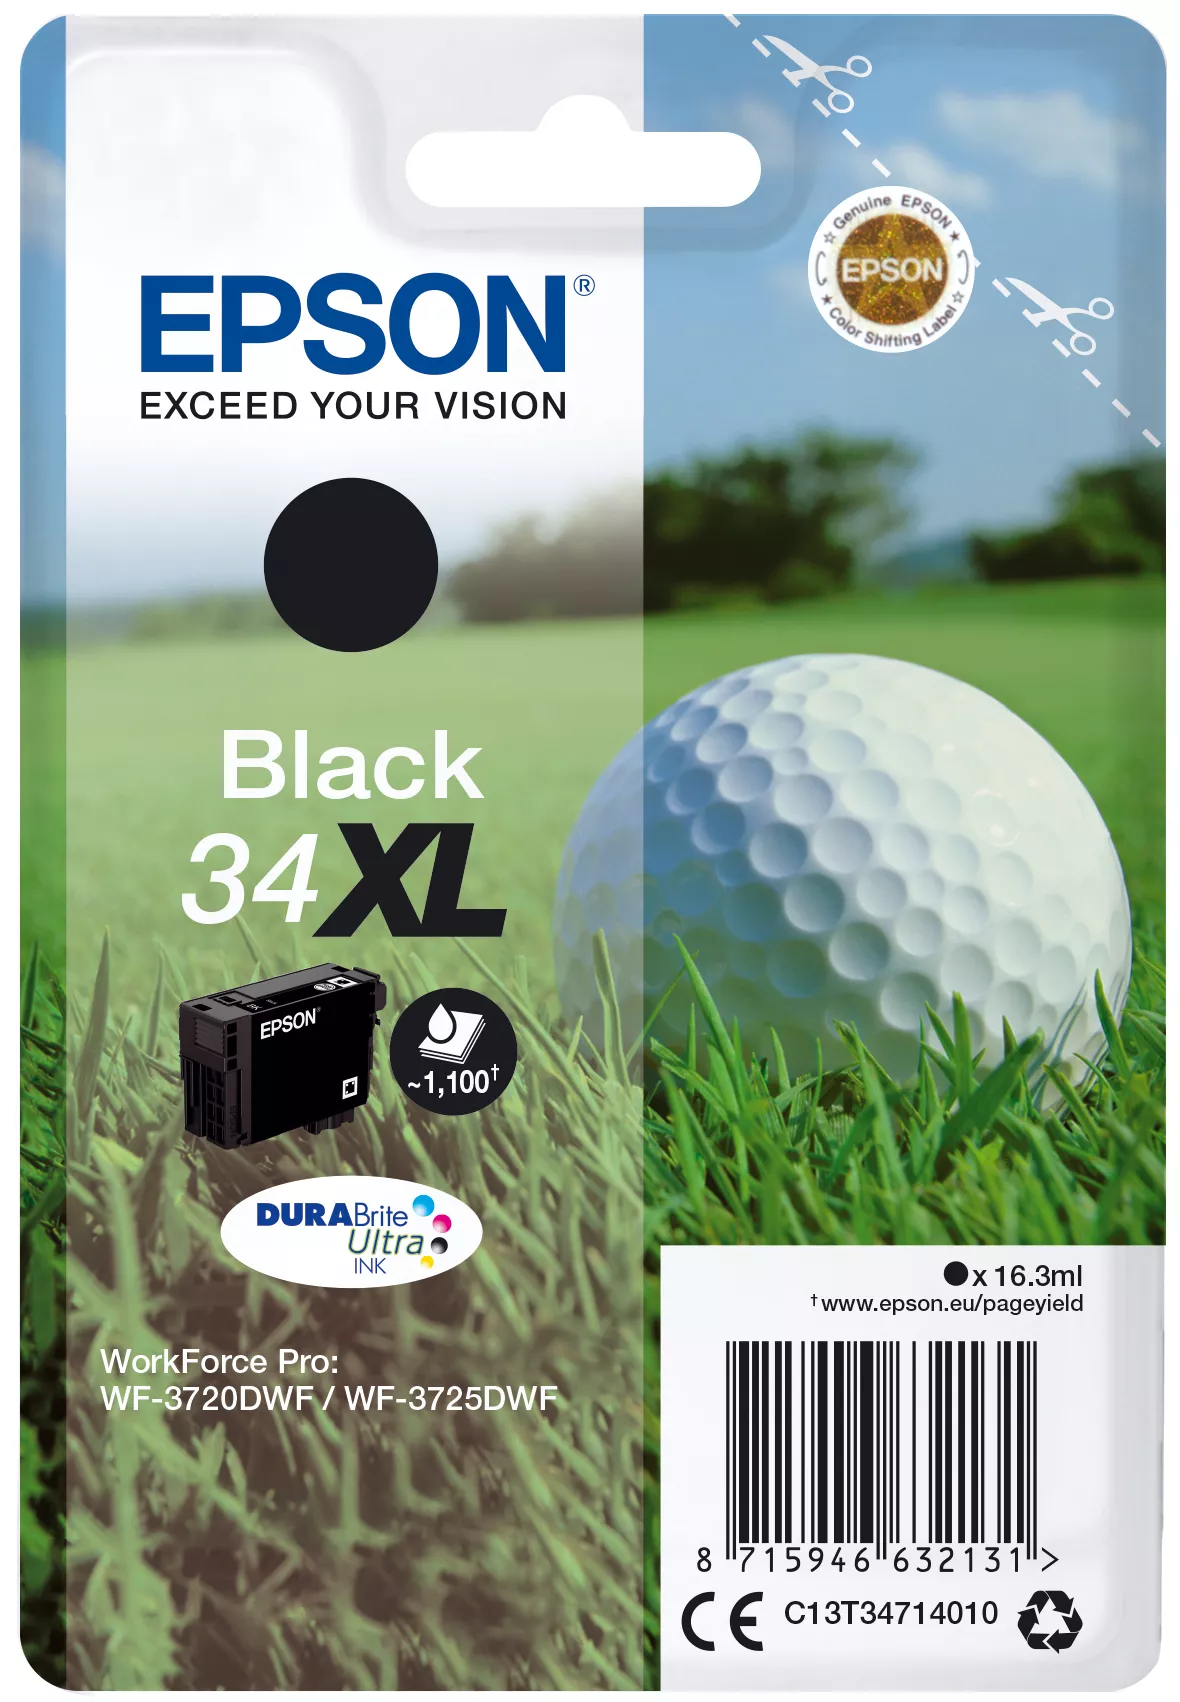 Vente EPSON Singlepack 34XL Encre Noir DURABrite Ultra 16,3ml au meilleur prix